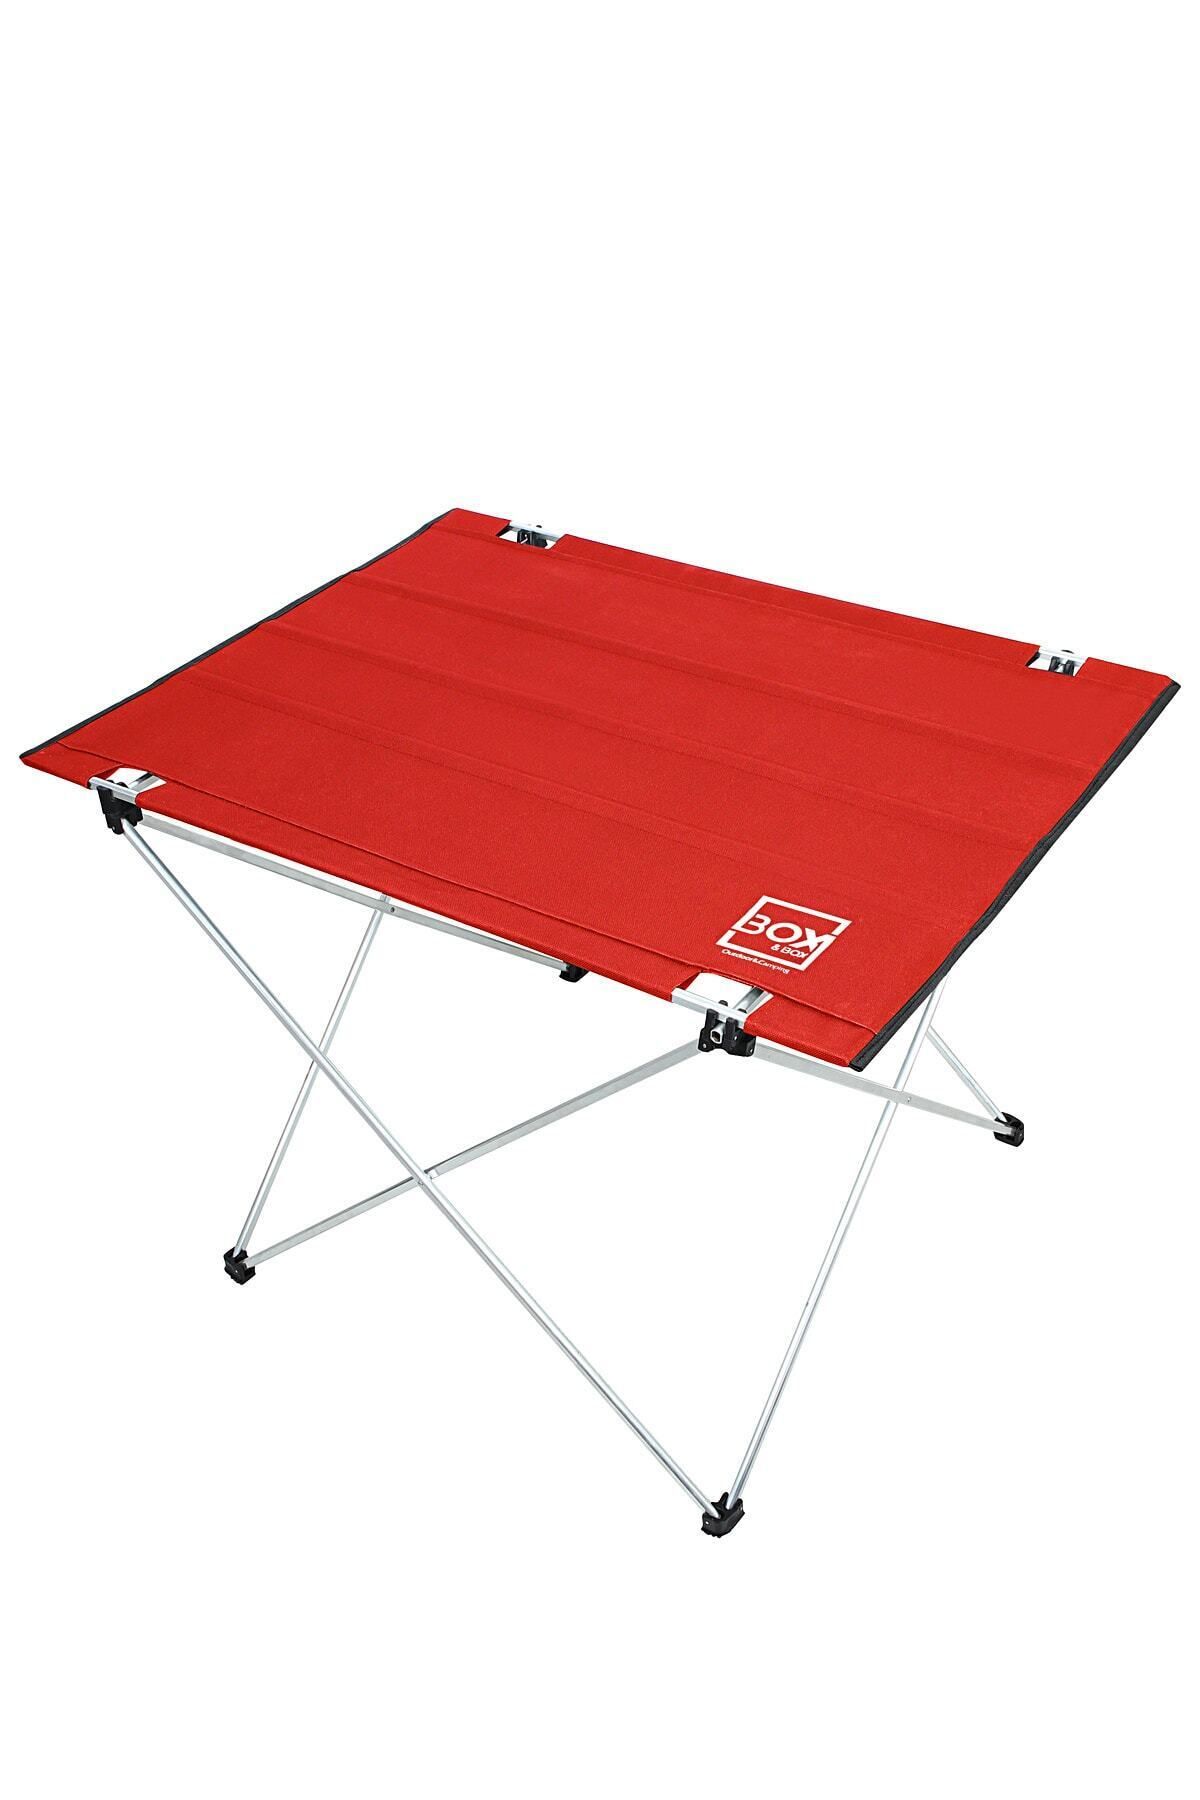 Box&Box Katlanabilir Kumaş Kamp Ve Piknik Masası, Kırmızı, Geniş Model, 73 X 55 X 48 Cm